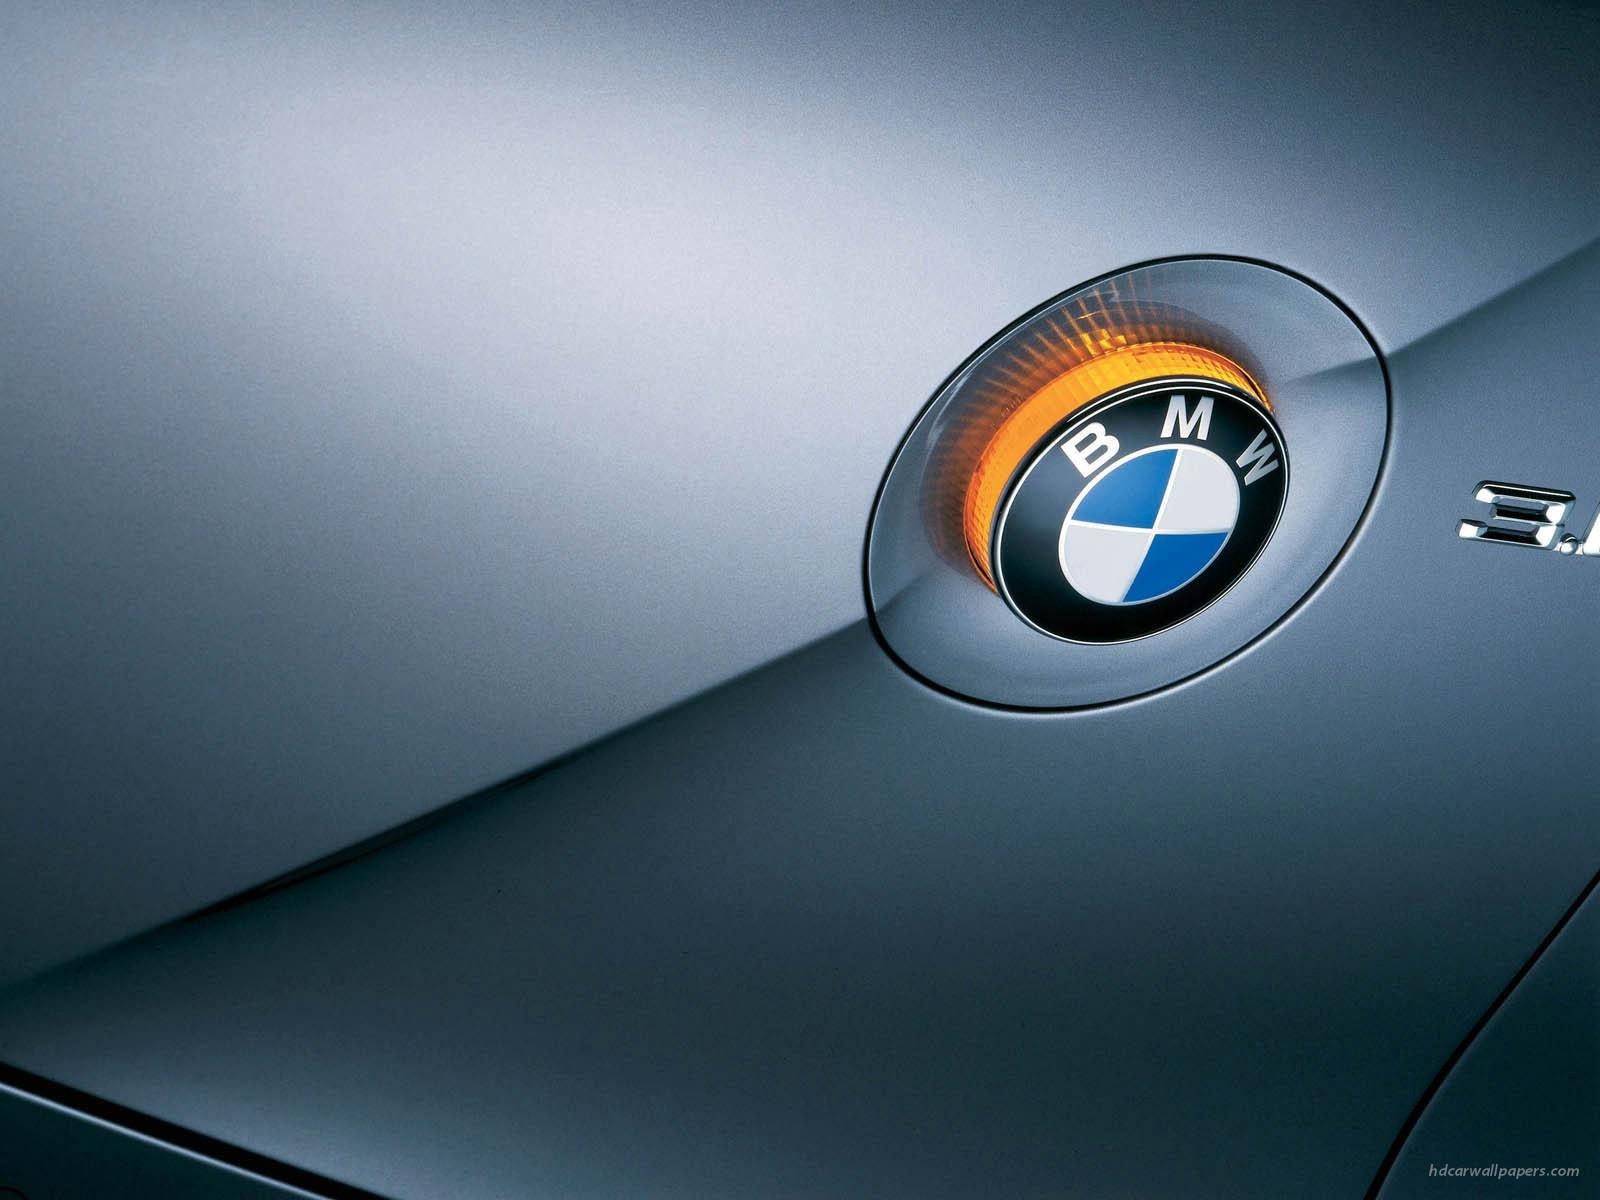 BMW Z4 Wallpaper in jpg format for free download